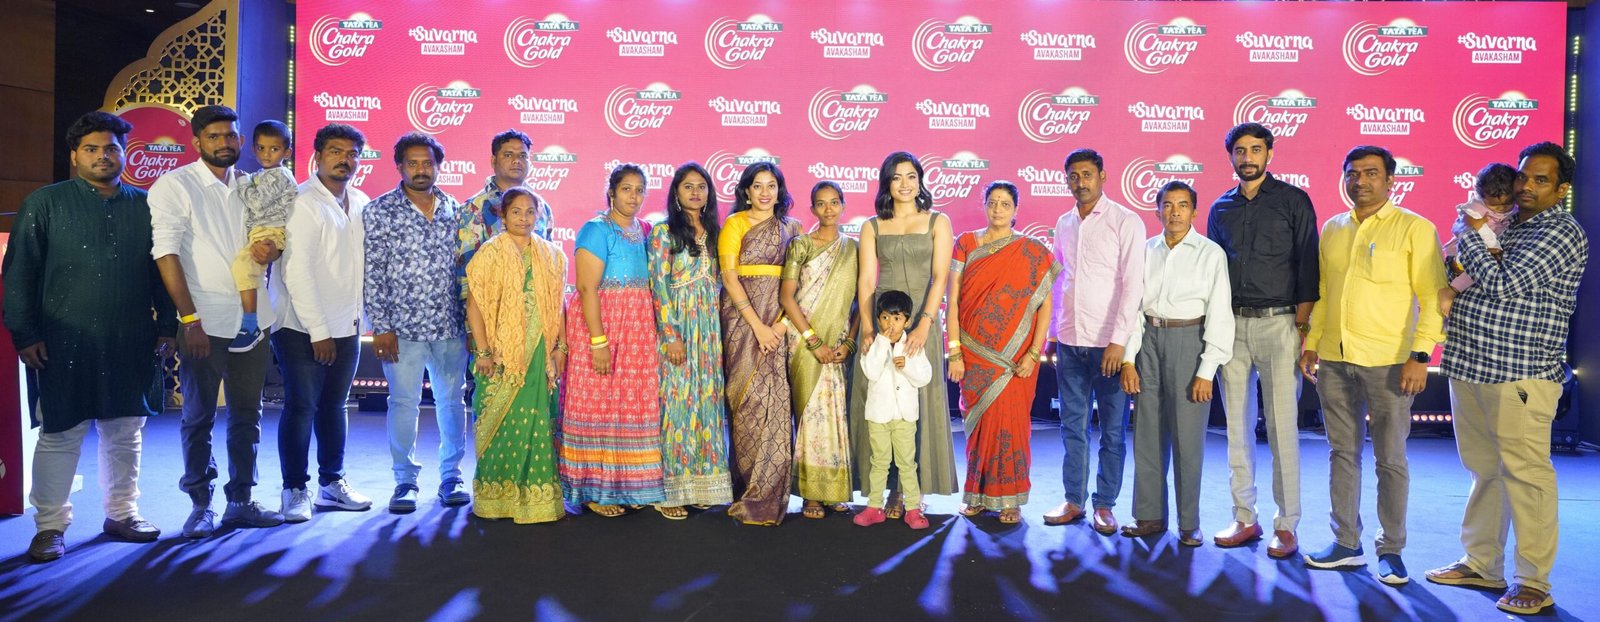 Tata Tea Chakra Gold Hosts Grand Finale Of Suvarna Avakasham Contest With Rashmika Mandanna